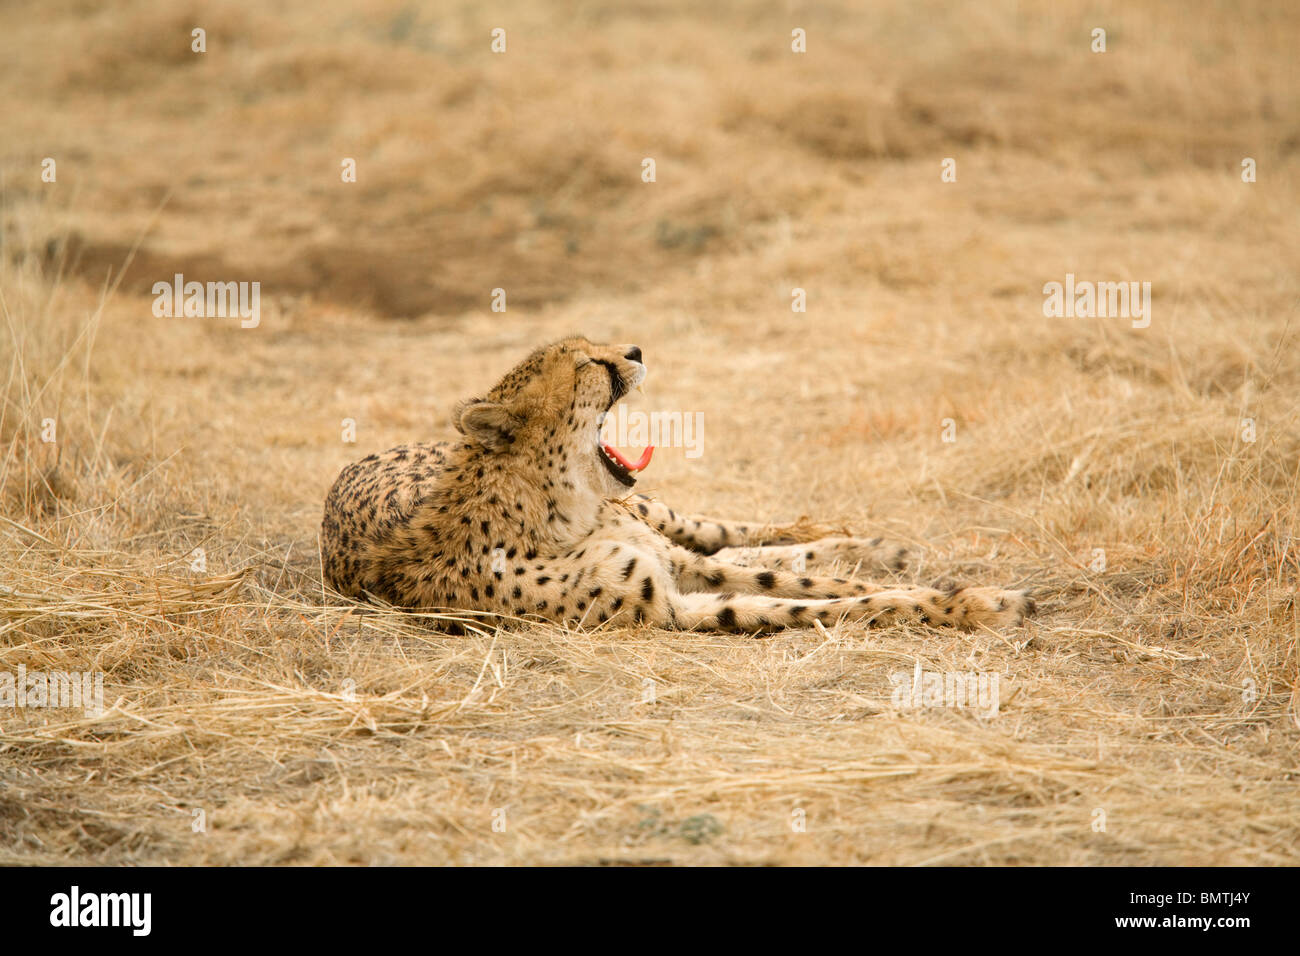 Young Cheetah, Namibia Stock Photo